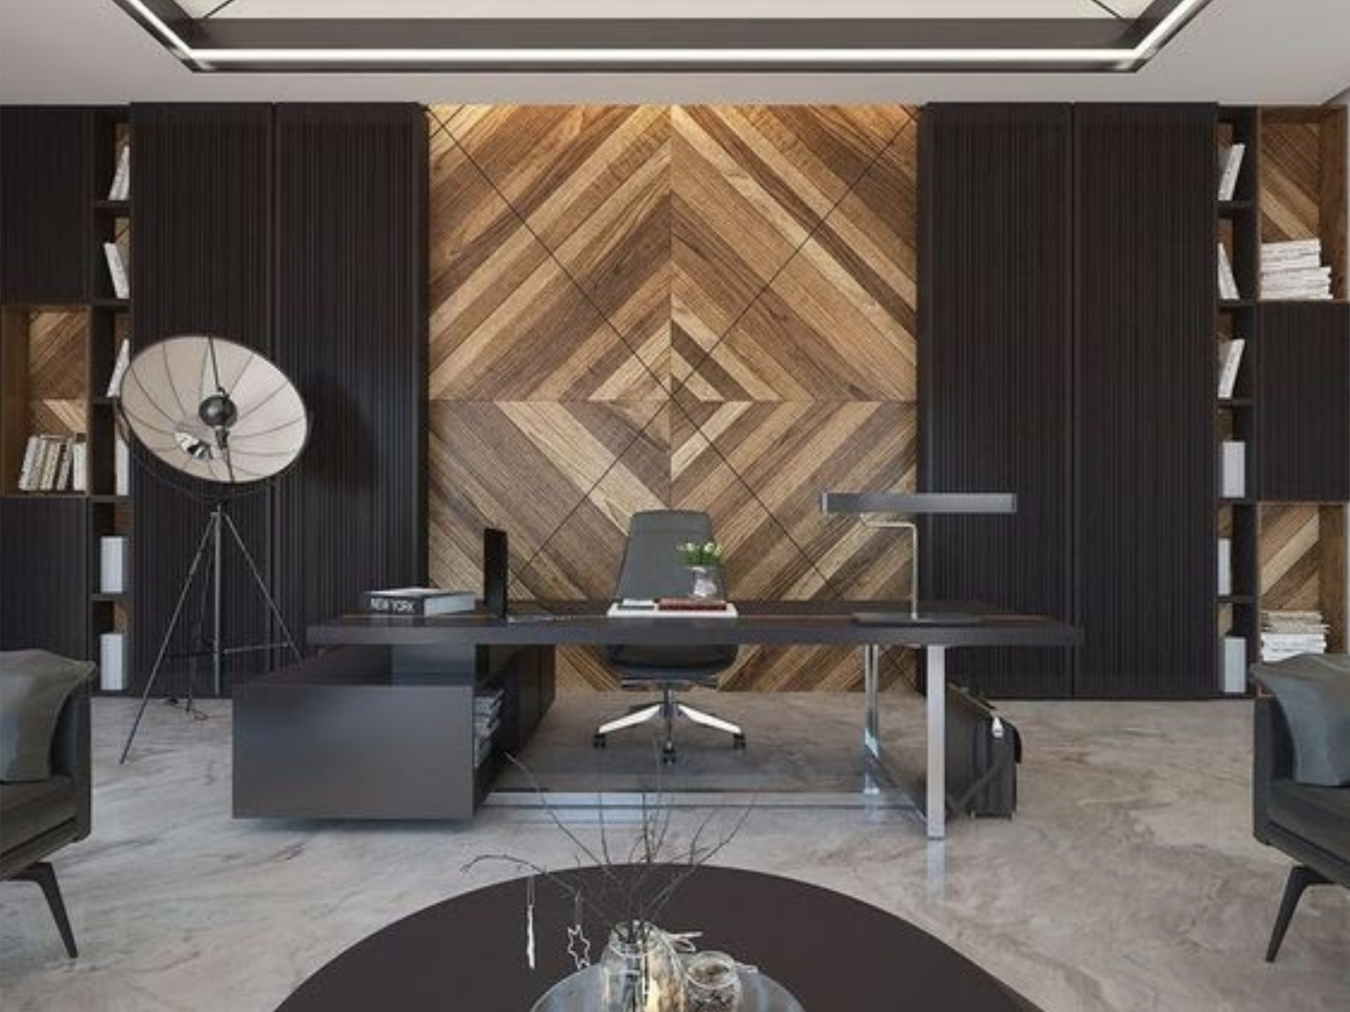 11 Office Interior Design Ideas for Inspiration | Avanti Systems